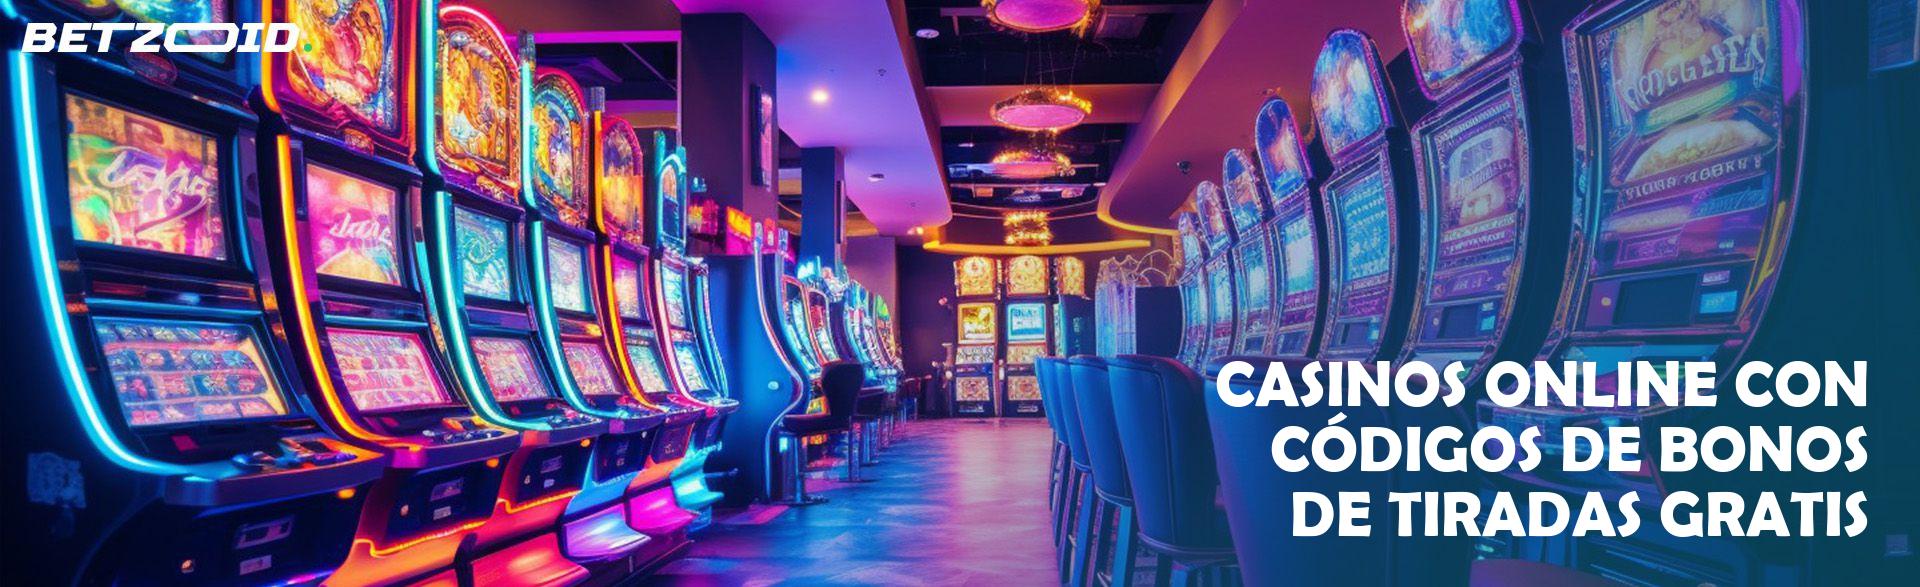 Casinos Online con Códigos de Bonos de Tiradas Gratis.